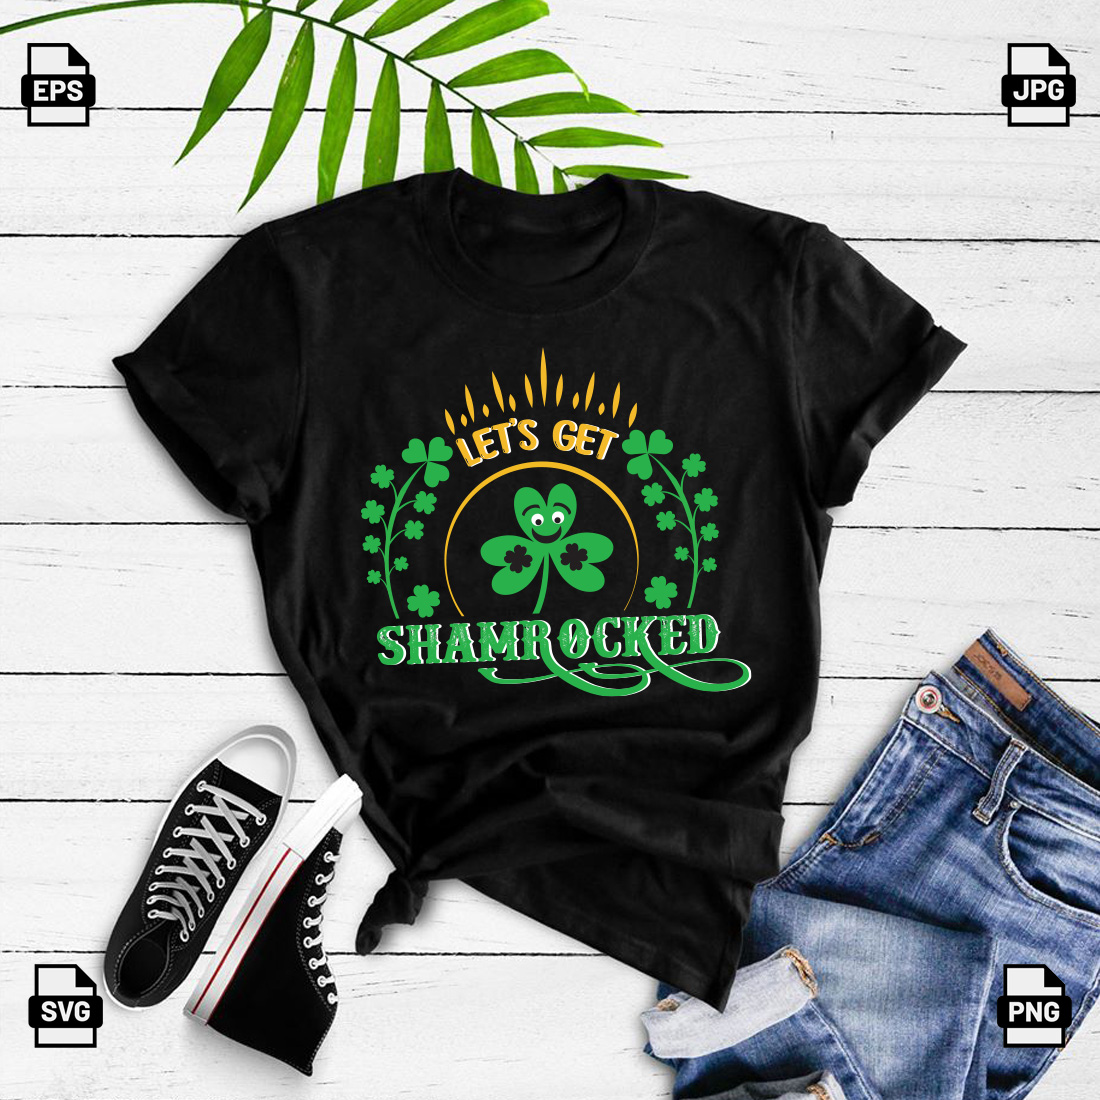 Let’s get shamrocked St Patrick's day t-shirt design preview image.